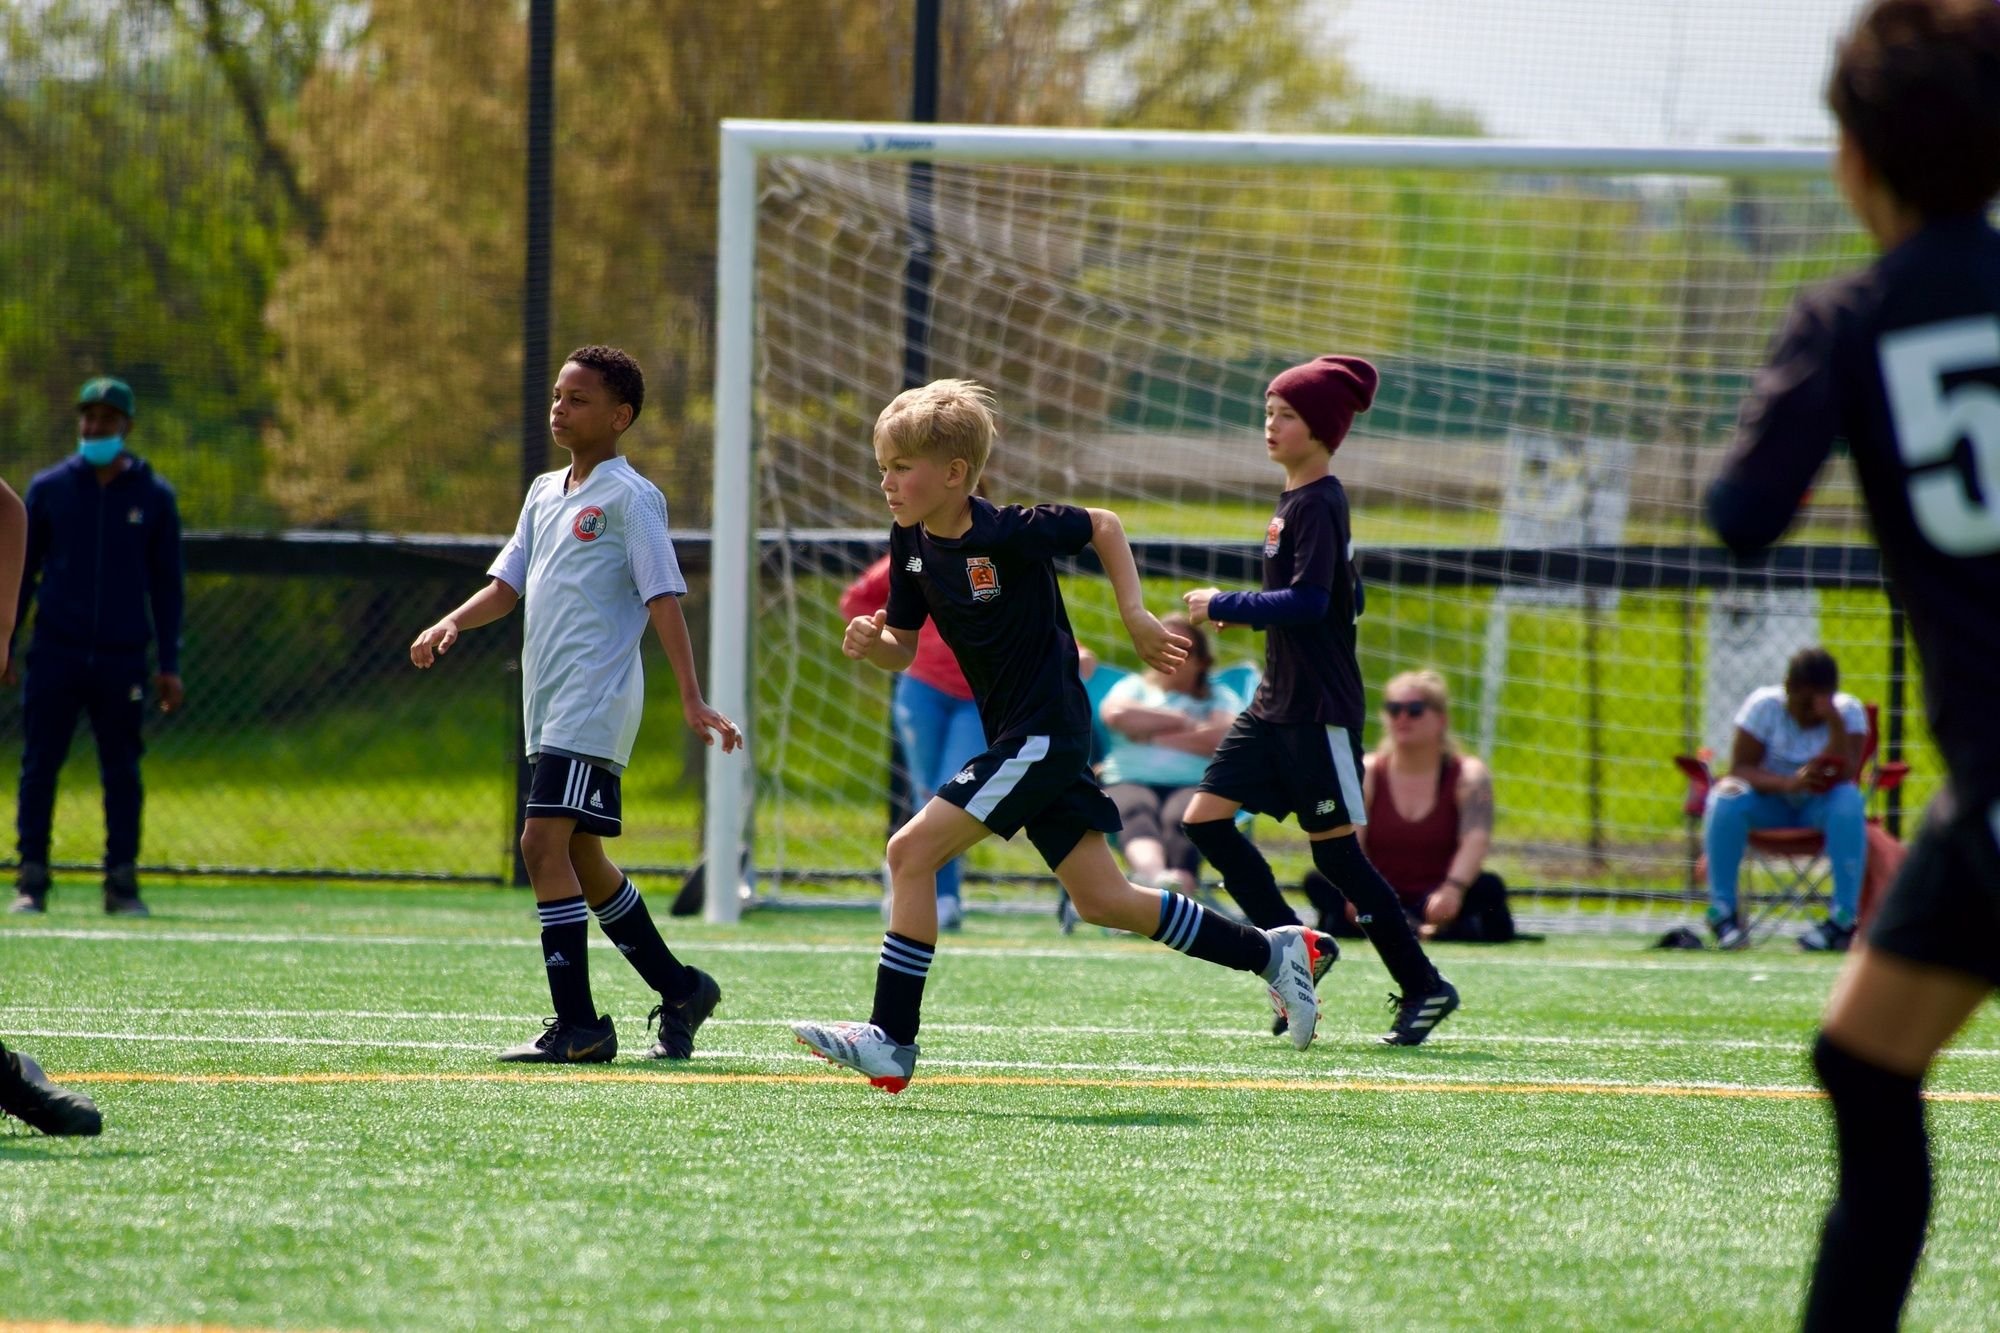 Dc-way-soccer-club-for-kids-in-washington-dc-5.jpeg